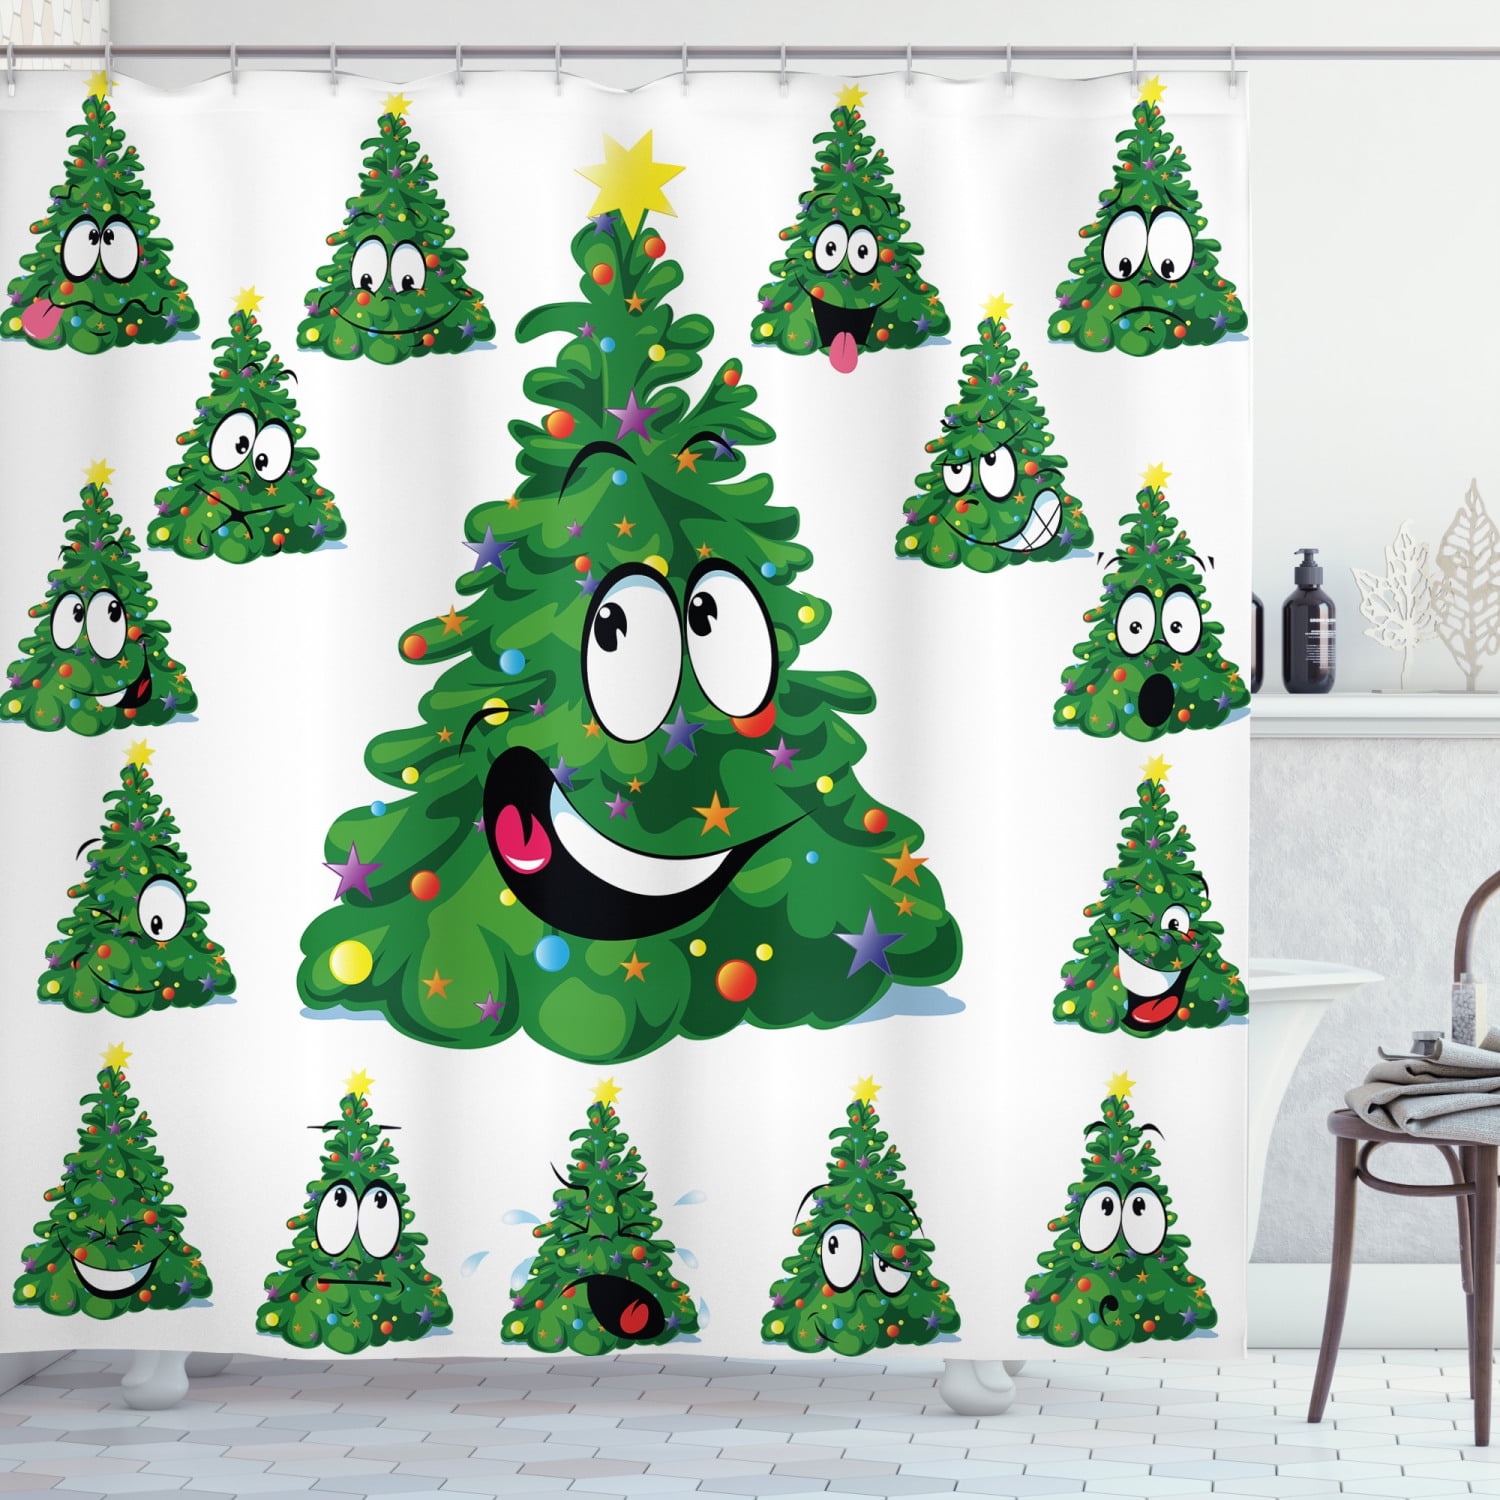 Waterproof Cartoon Christmas Ornaments Shower Curtain Bathroom Decor Set Hooks 